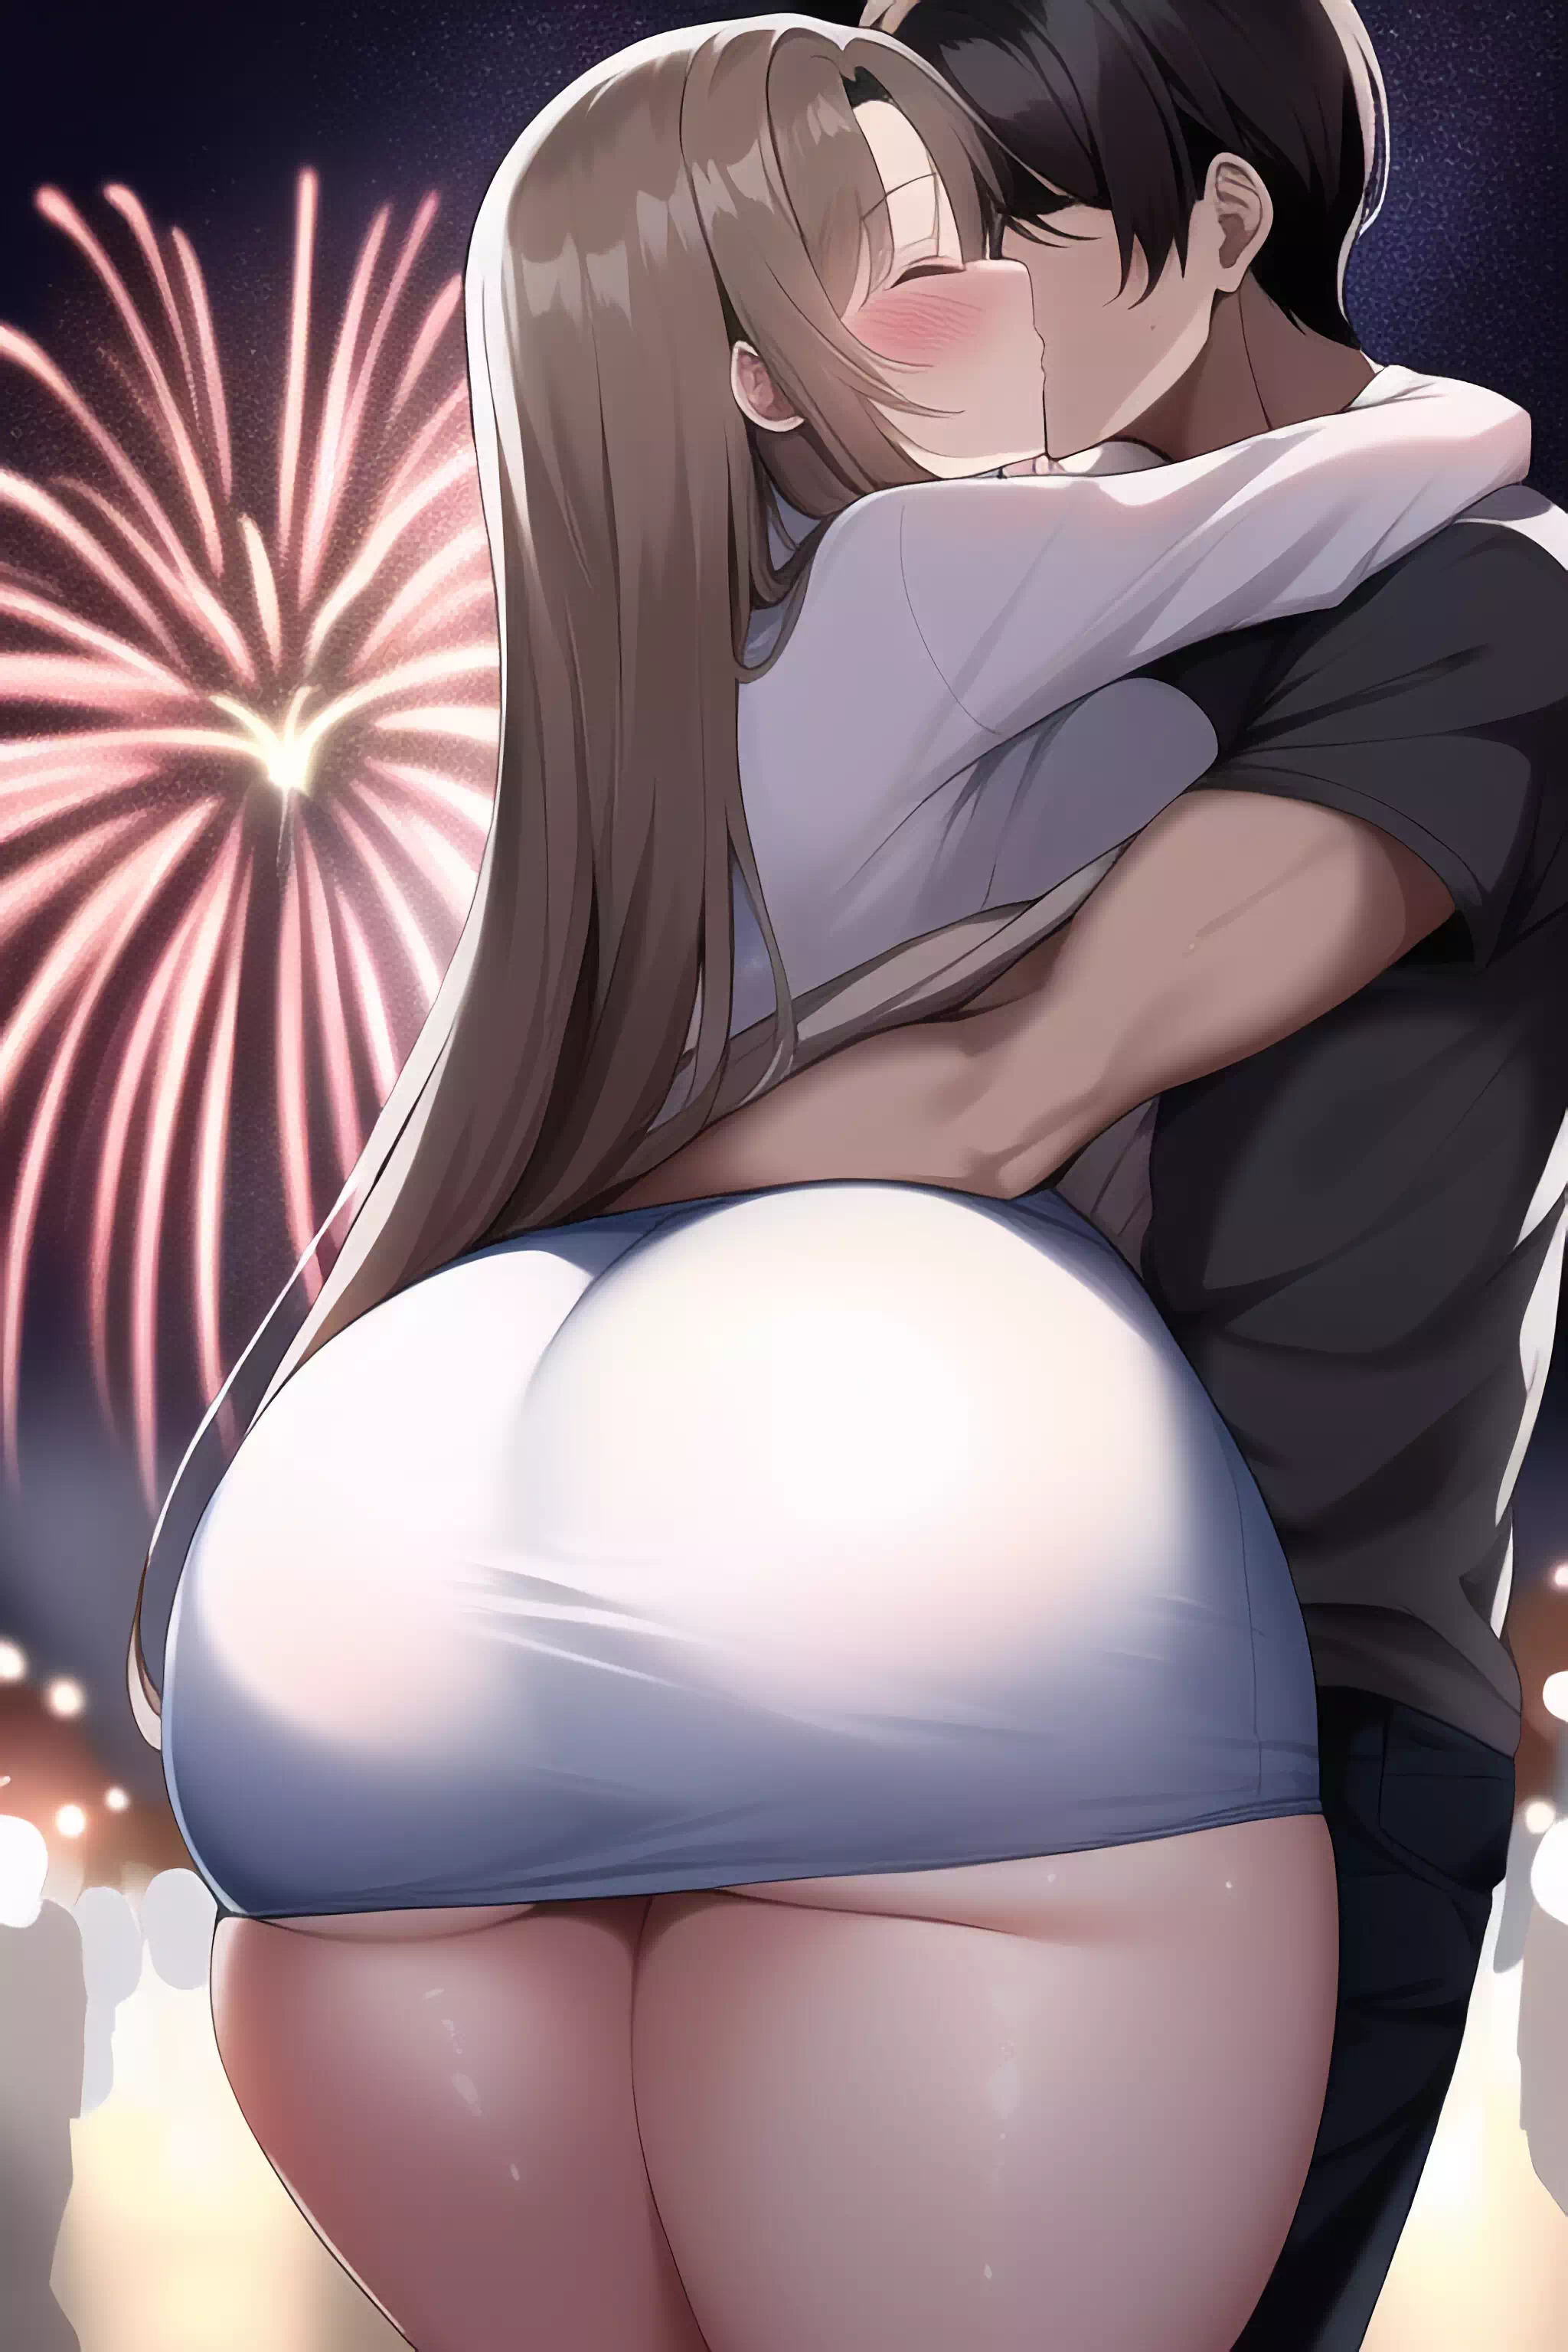 Romantic kiss with Asuna